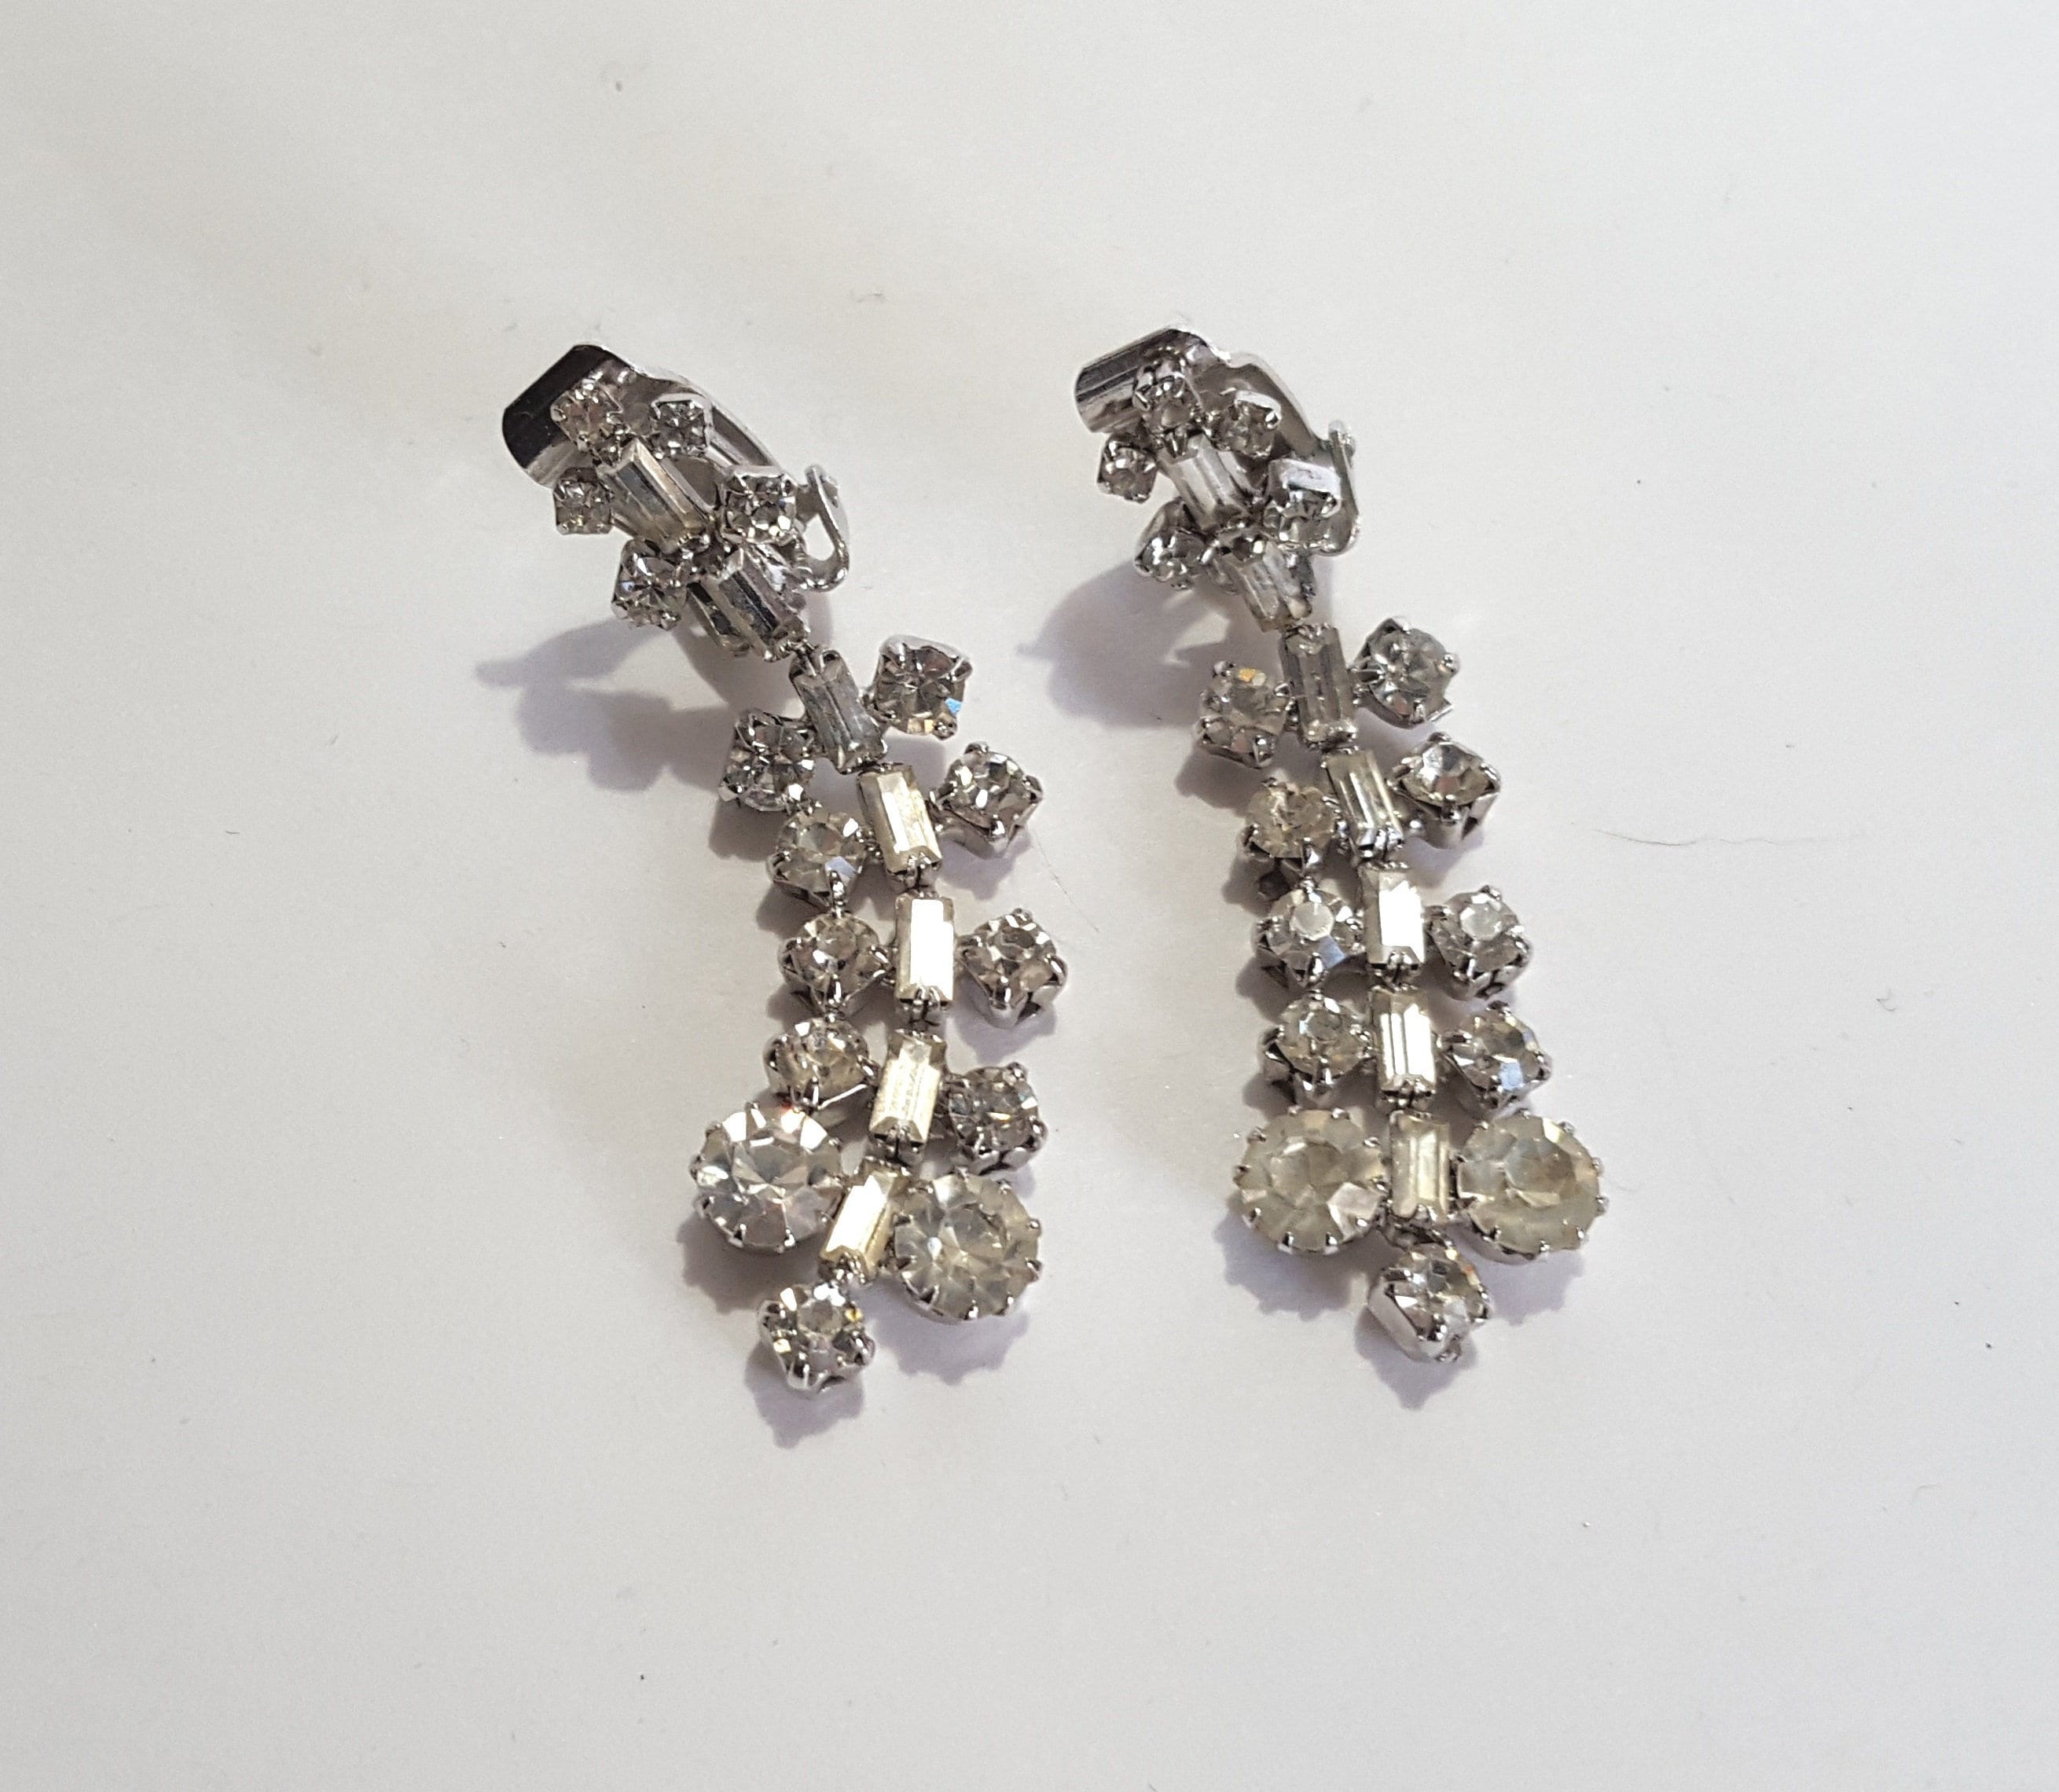 Vintage rhinestone stud earrings